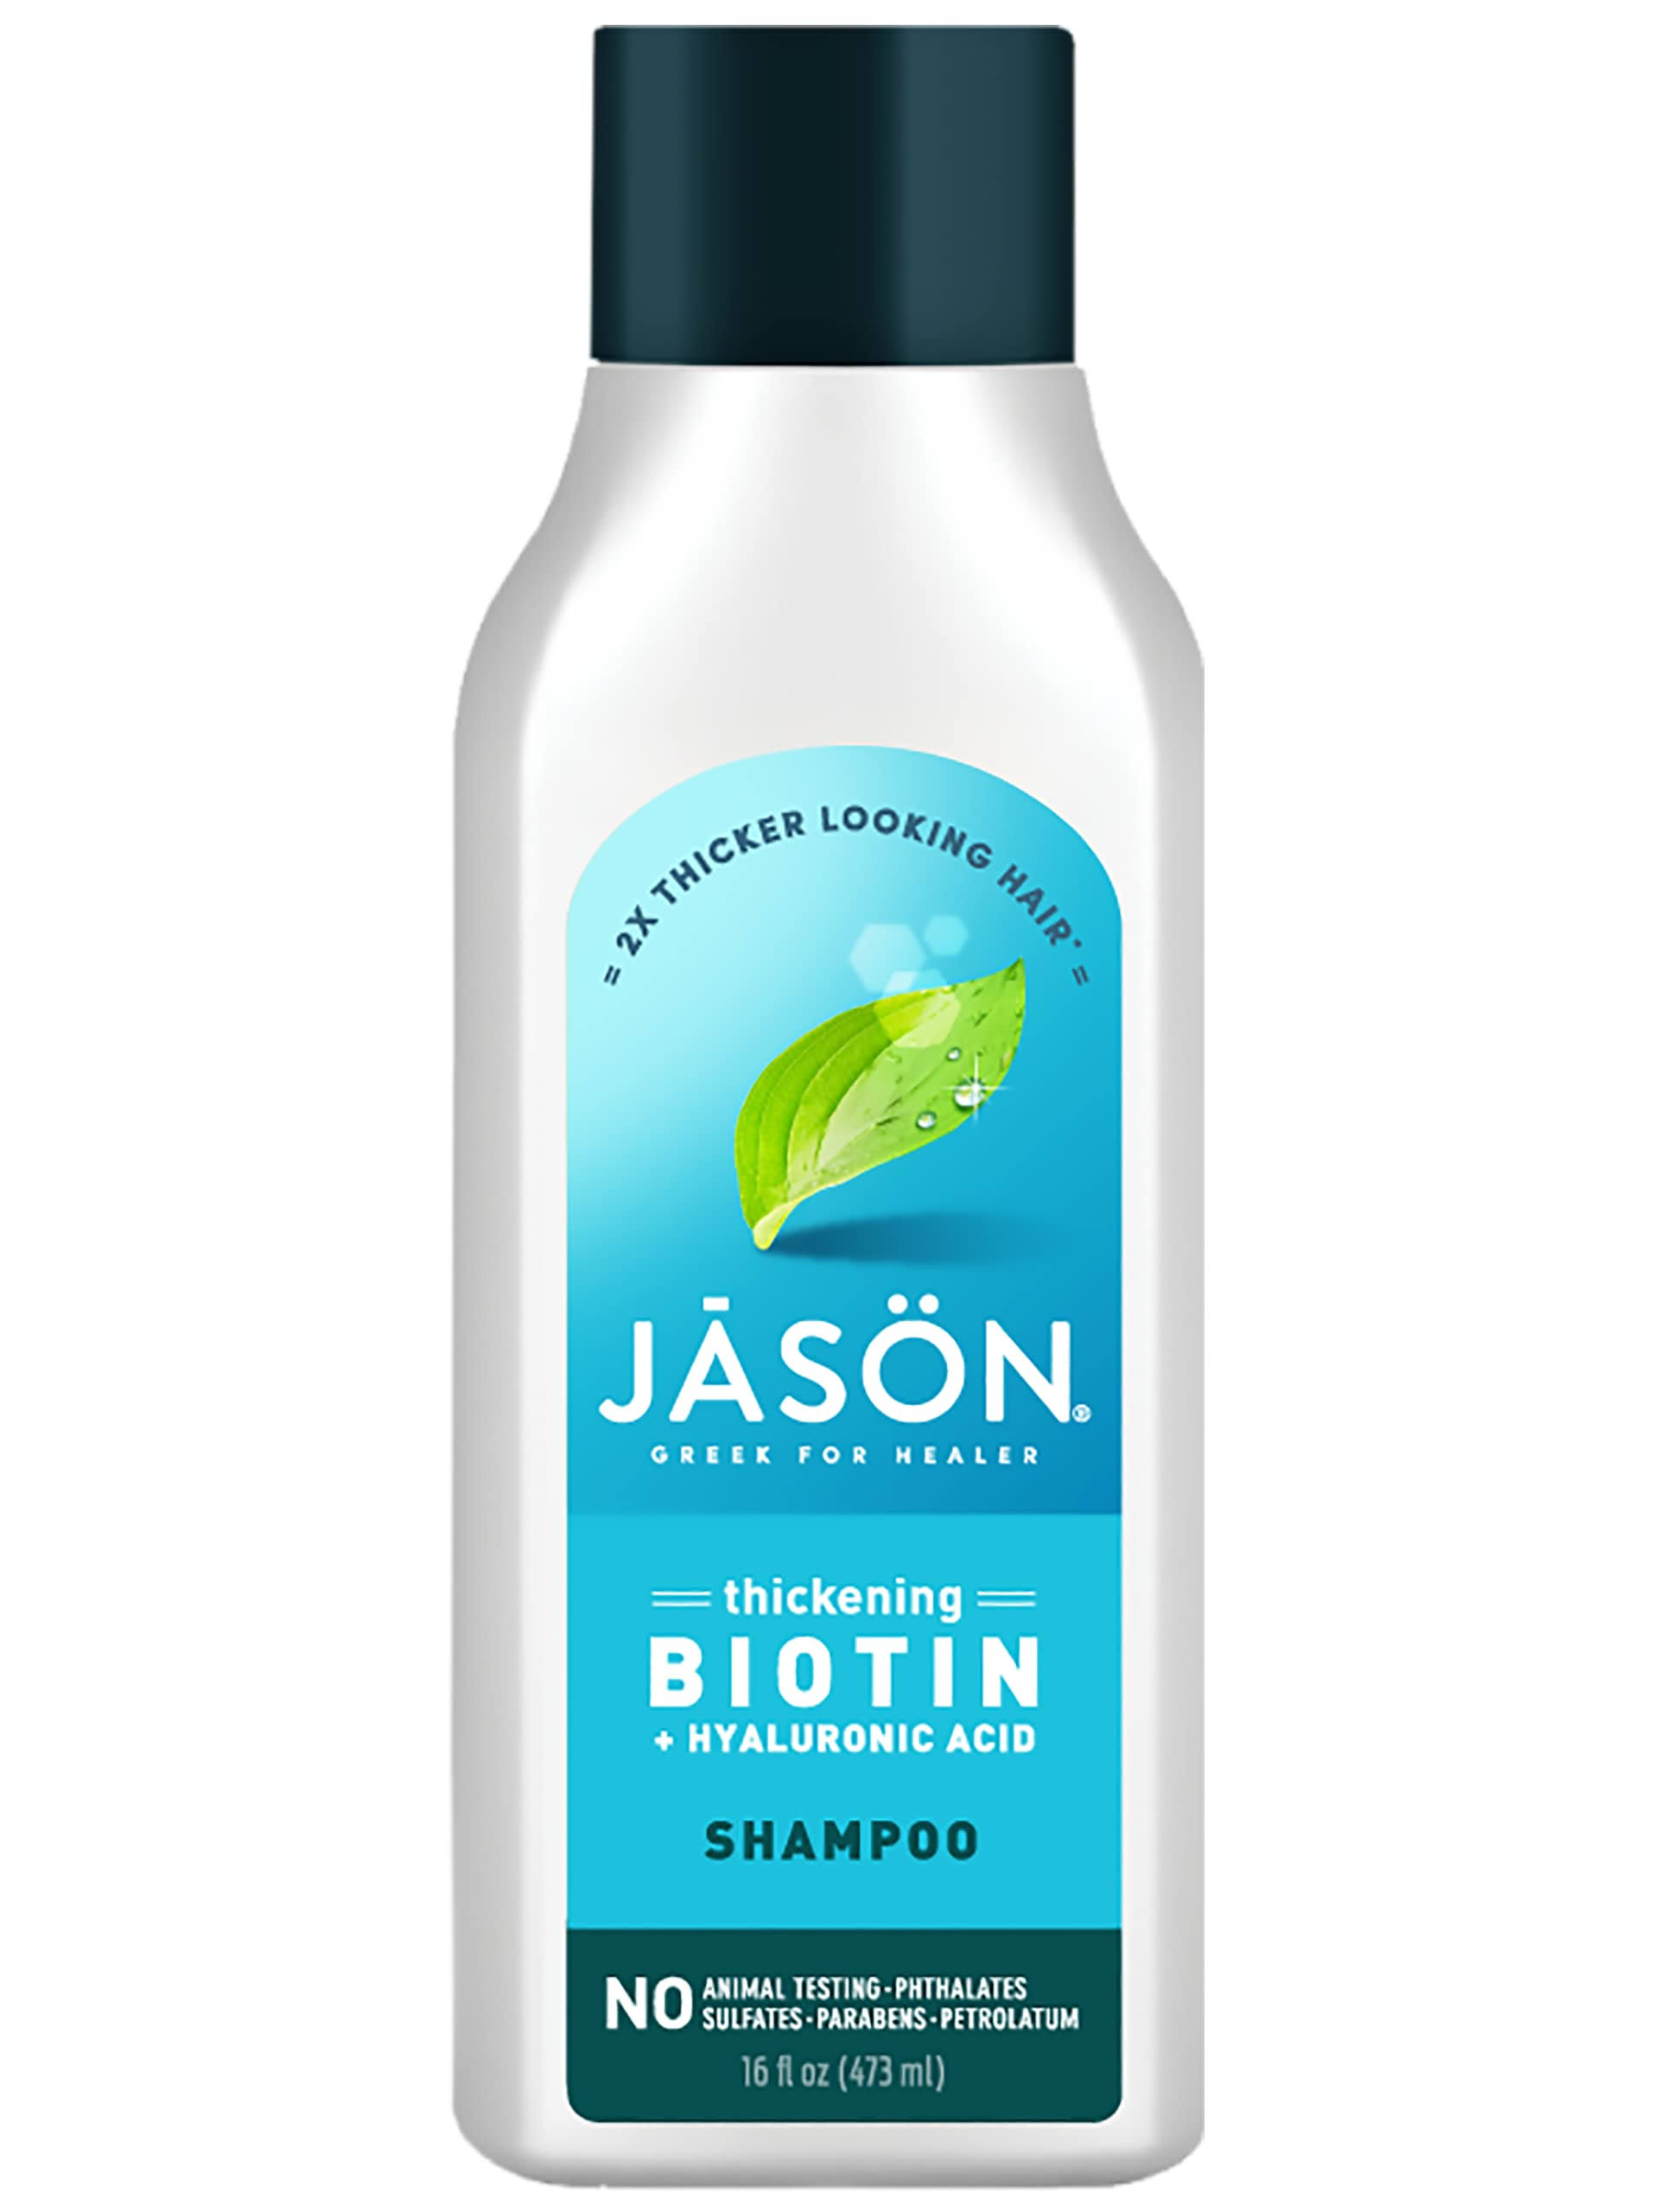 Jason Natural Biotin Hair Fortifying Shampoo